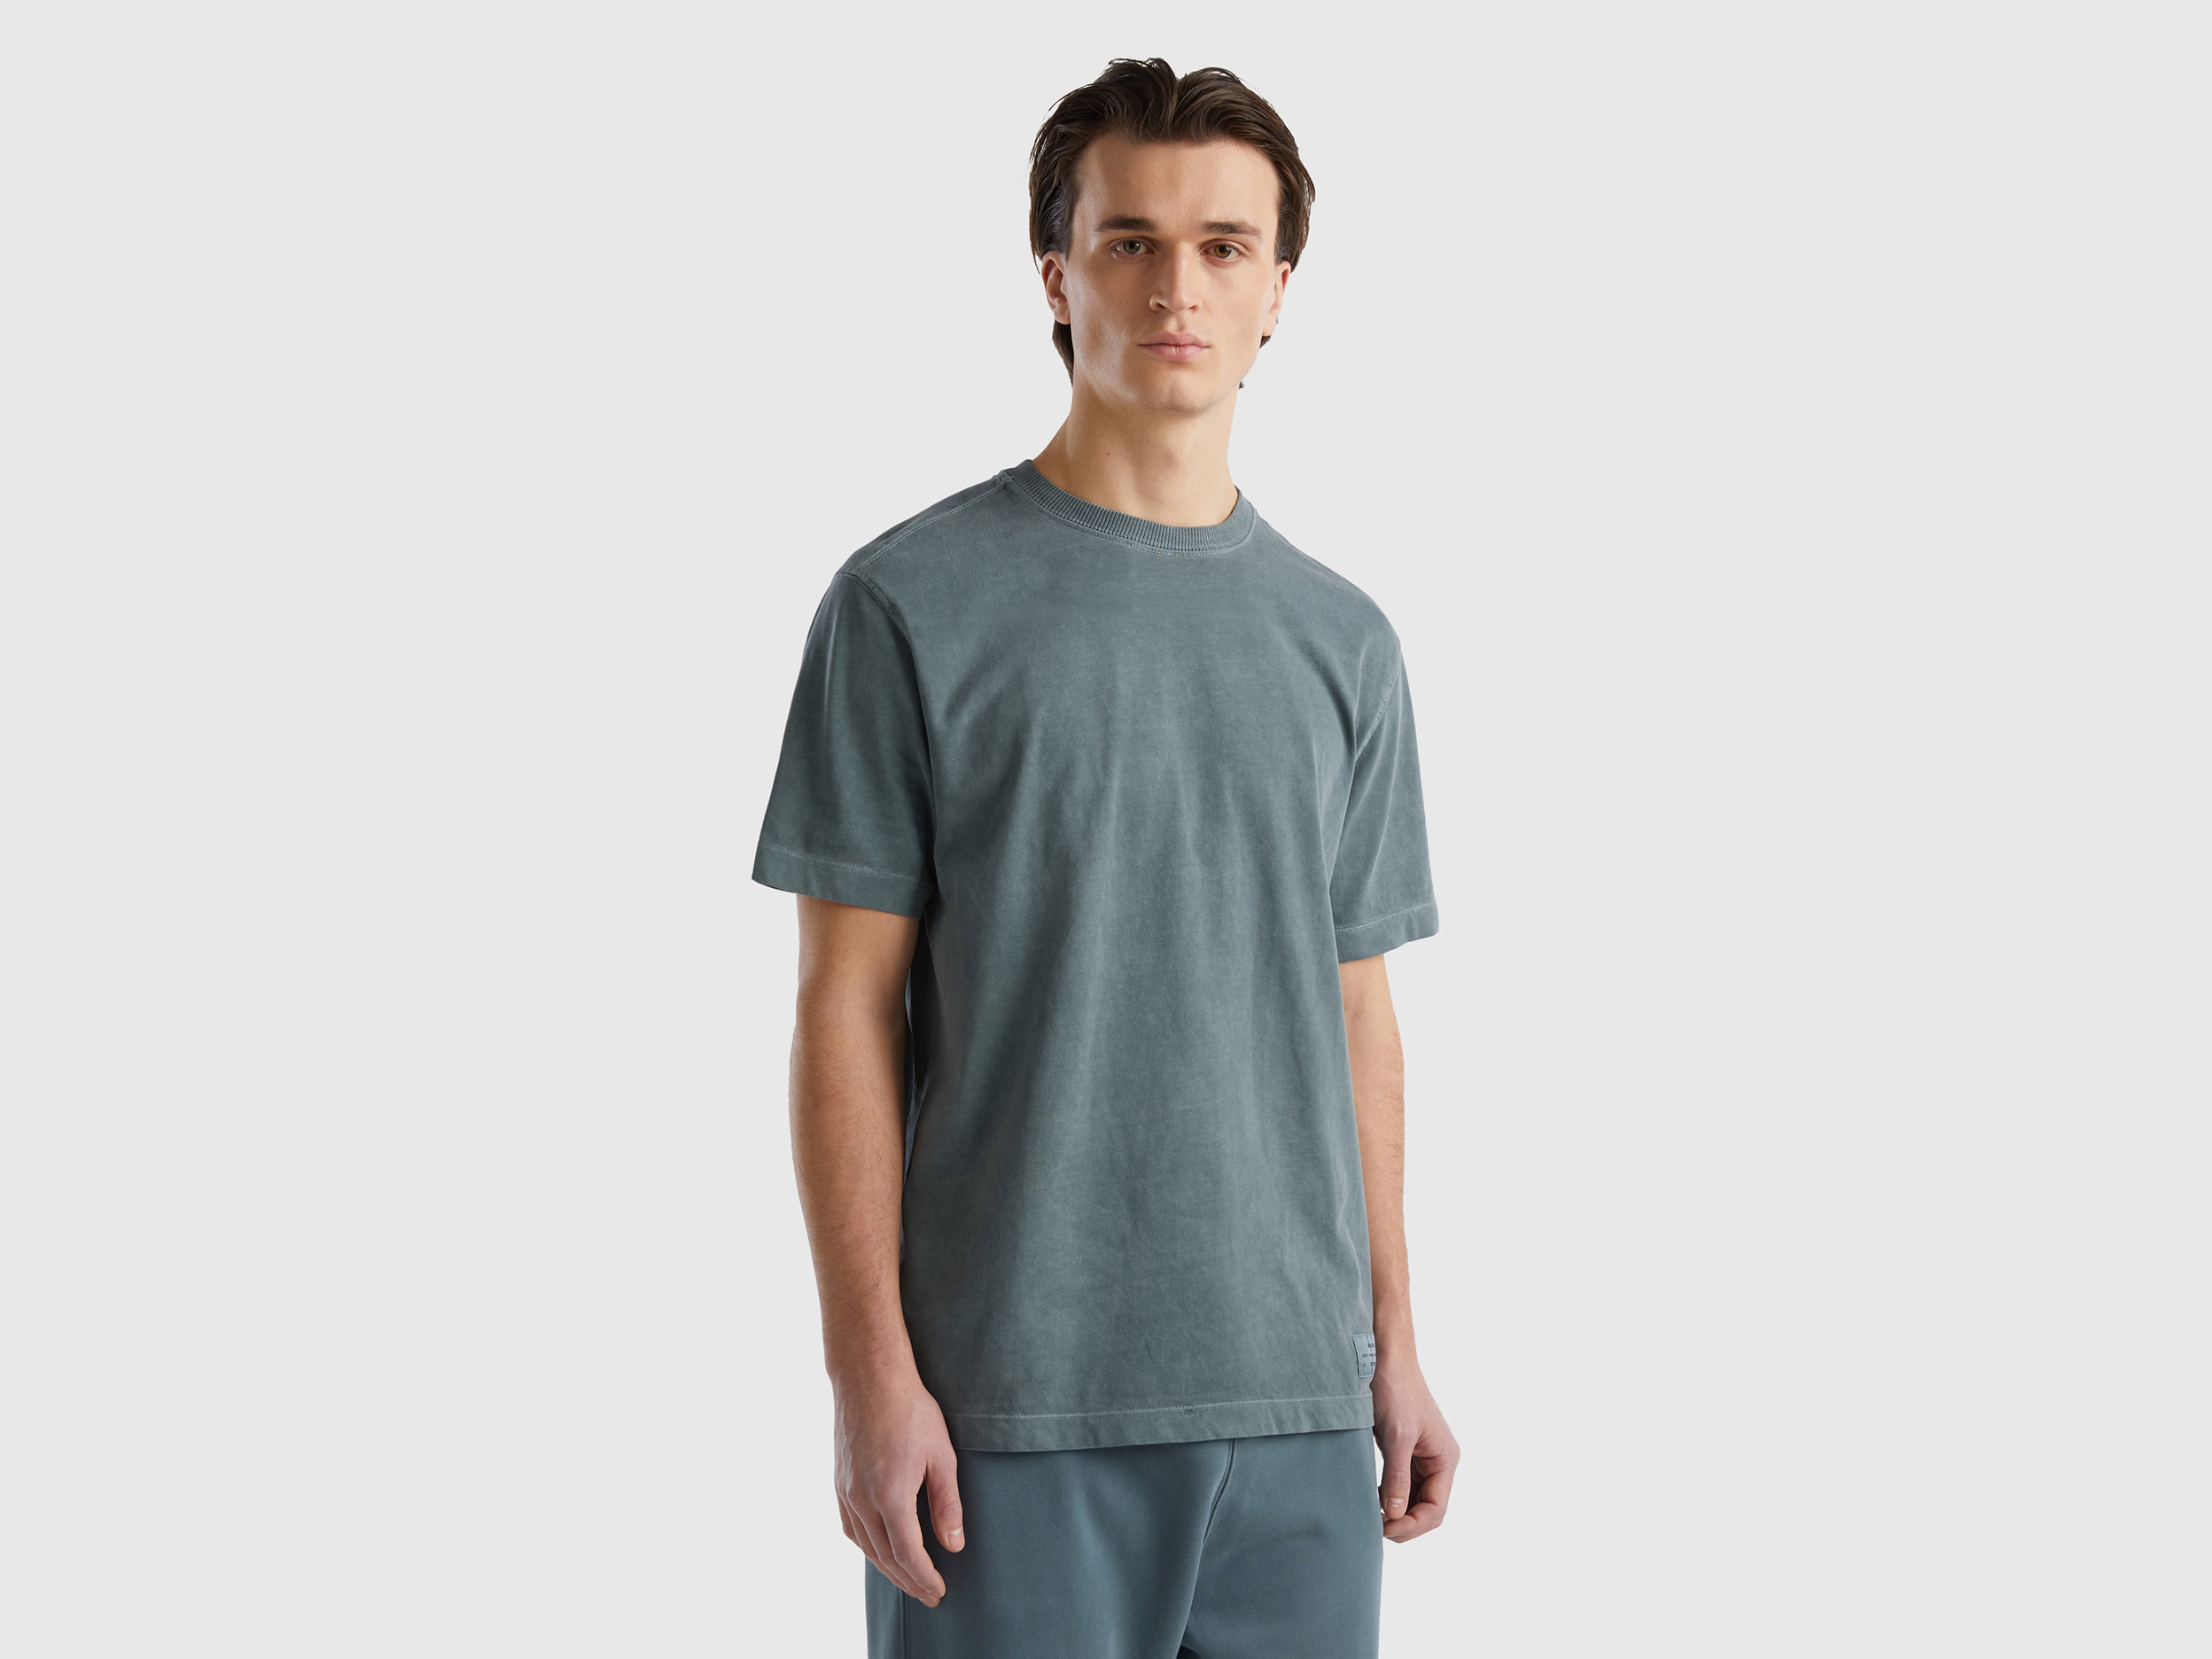 Benetton, 100% Organic Cotton Crew Neck T-shirt, size XXL, Dark Gray, Men